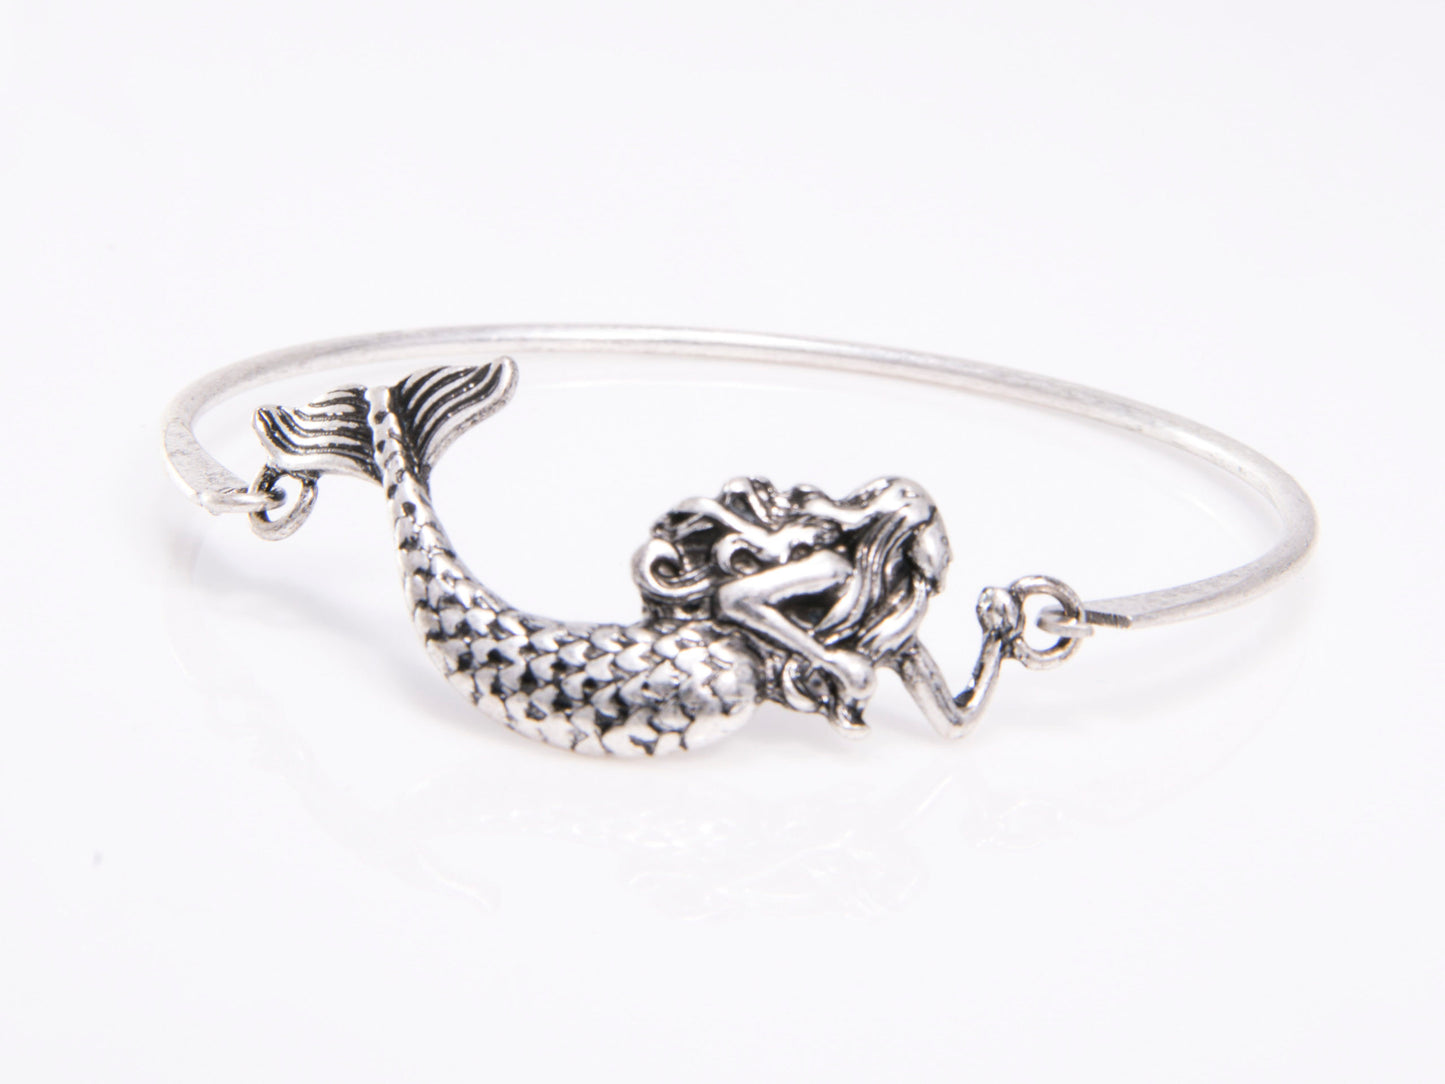 Silver Mermaid Cuff Bracelet